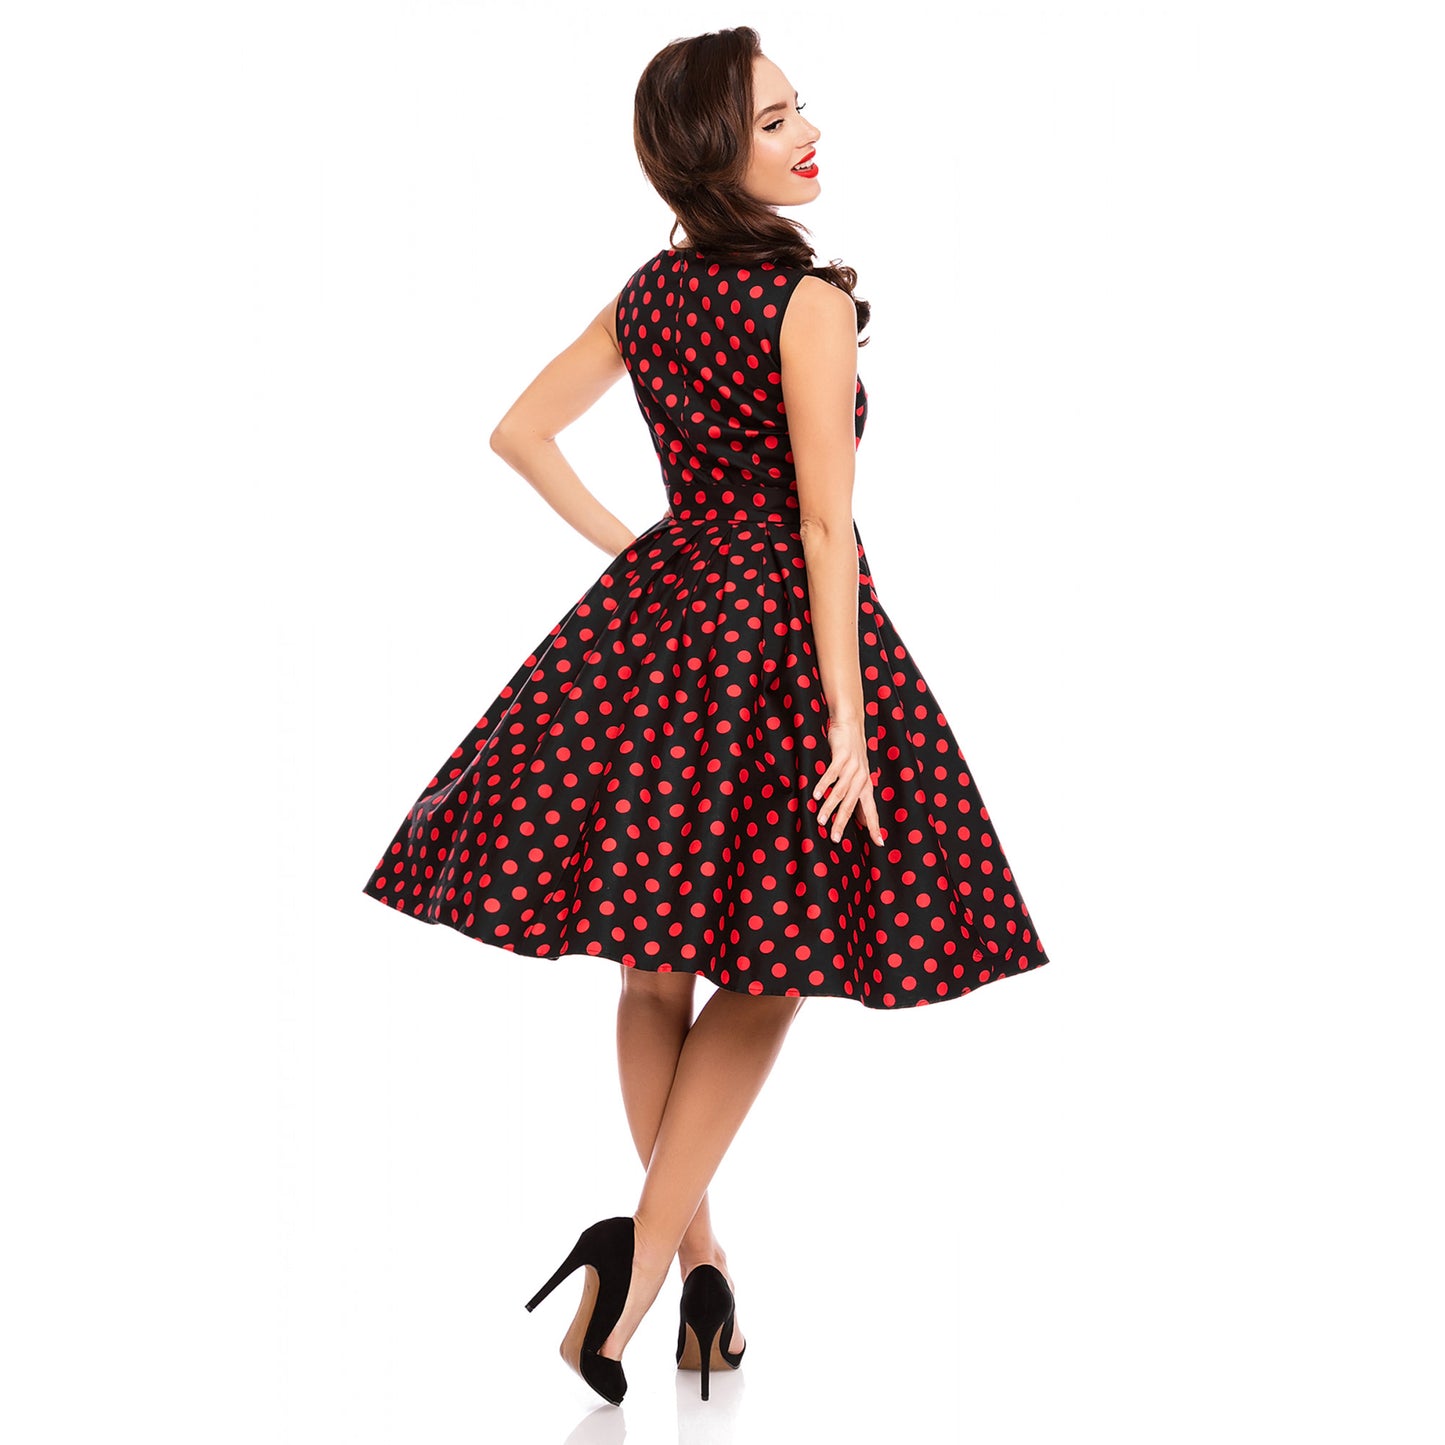 Elizabeth Vintage Swing Dress in Black/Red Polka by Dolly & Dotty